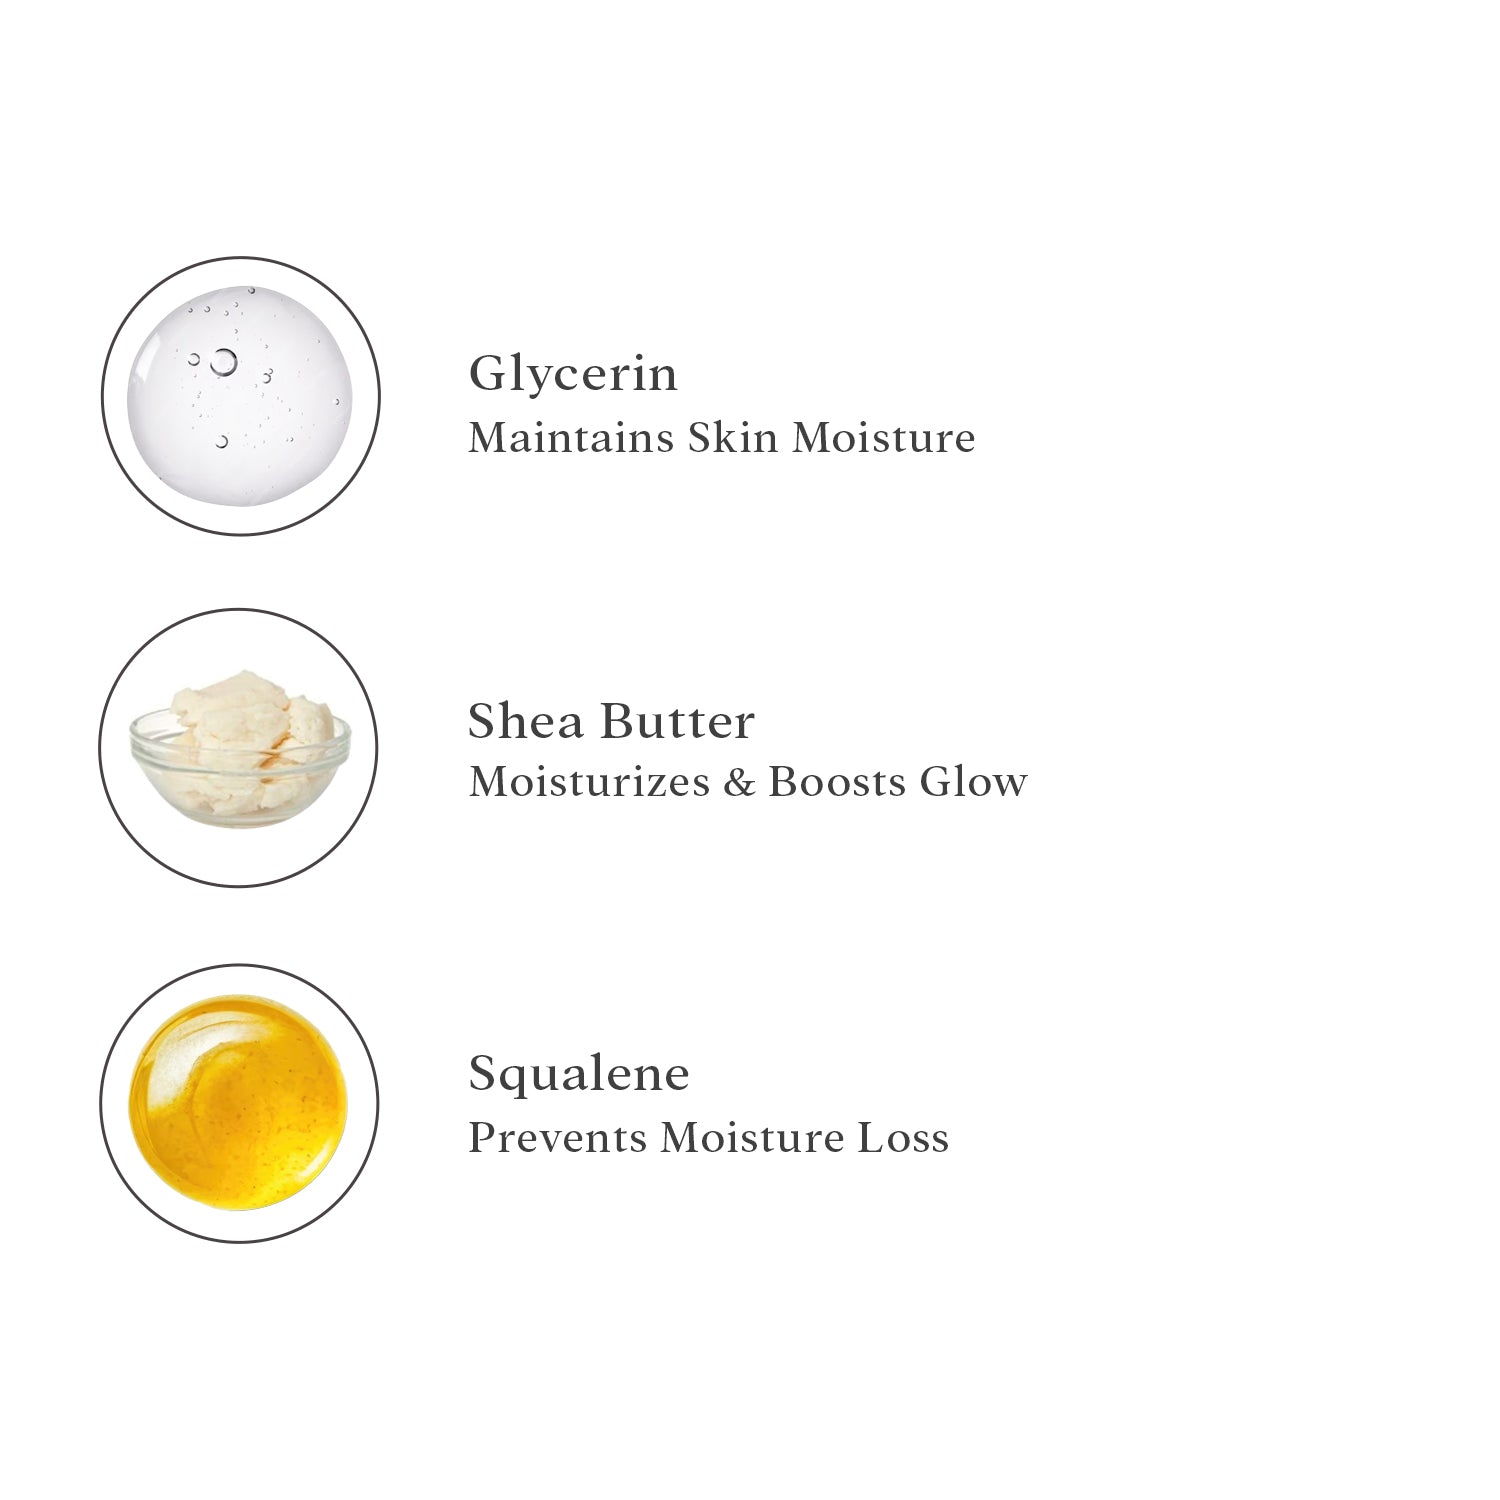 Derma Fresh Face Cream Ideal for Dry Skin (50g)